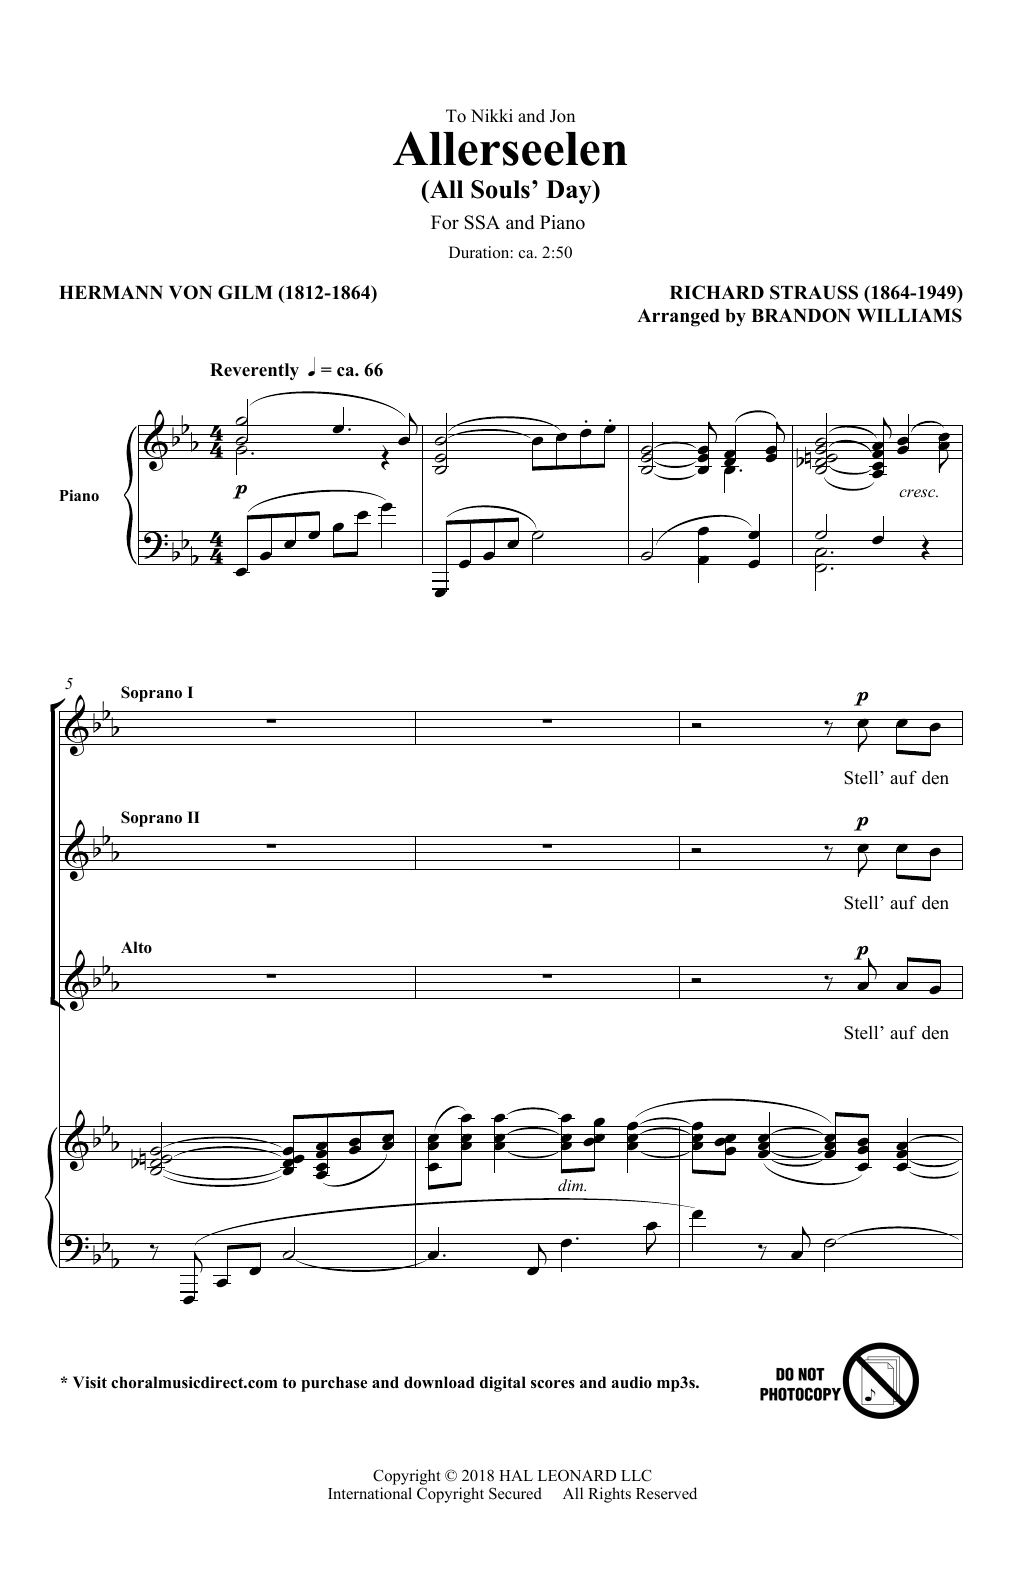 Download Richard Strauss & Hermann von Gilm Allerseelen (arr. Brandon Williams) Sheet Music and learn how to play SSA Choir PDF digital score in minutes